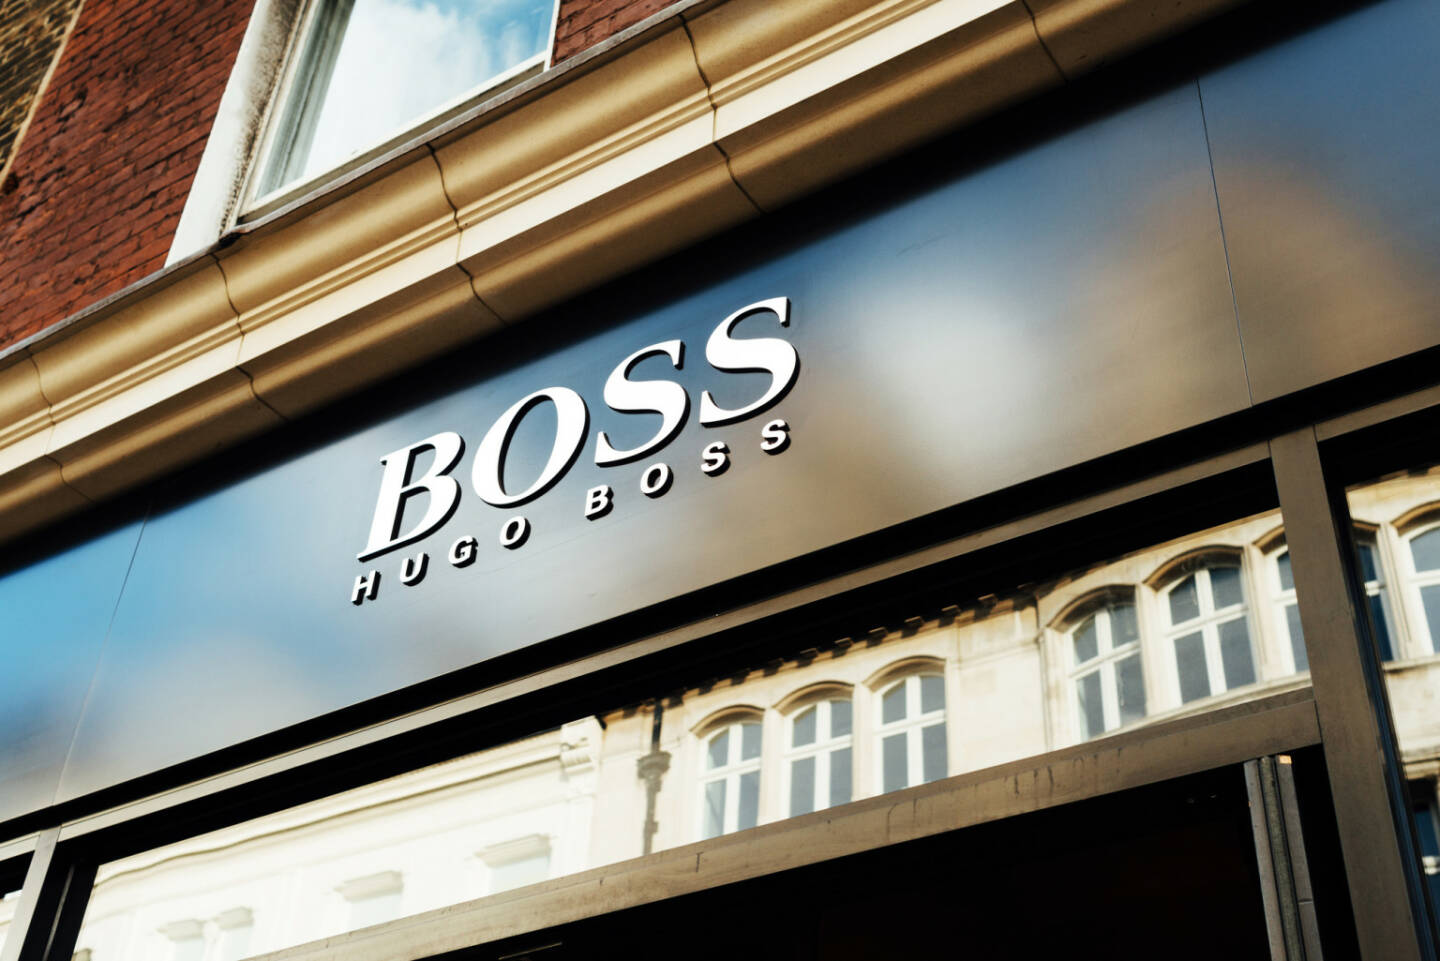 Hugo Boss Shop in New Bond St, Mayfair, London - https://de.depositphotos.com/156978226/stock-photo-signboard-of-hugo-boss-shop.html